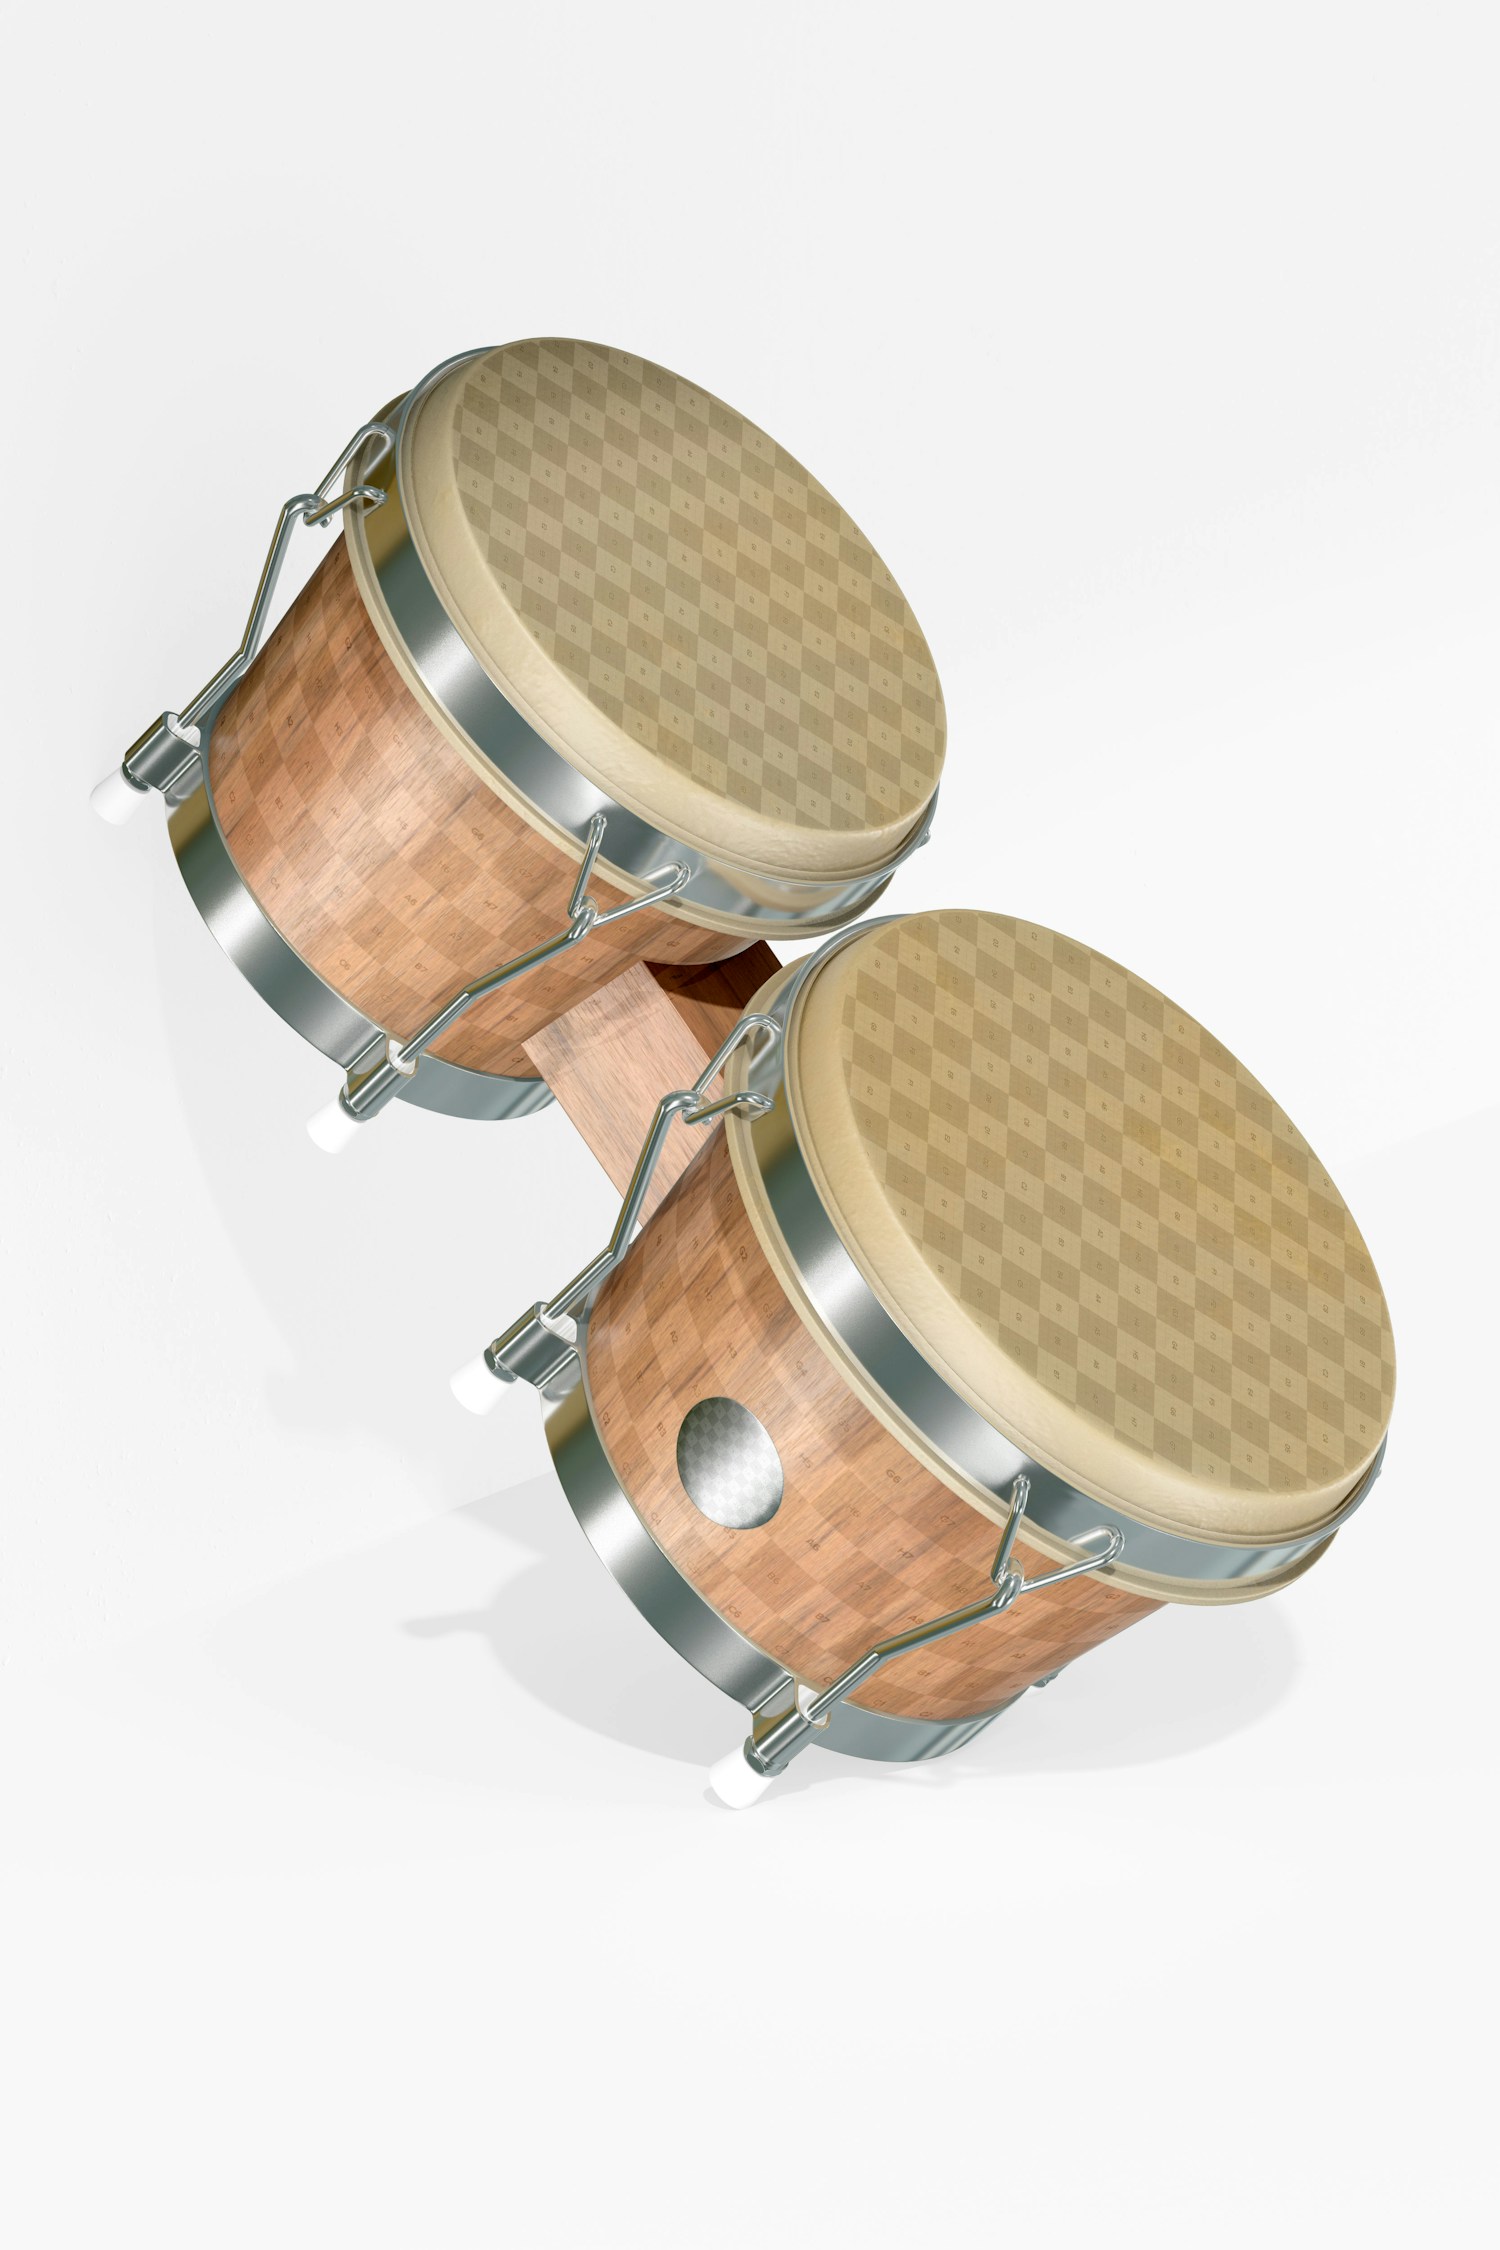 Bongo Drum Mockup, Leaned